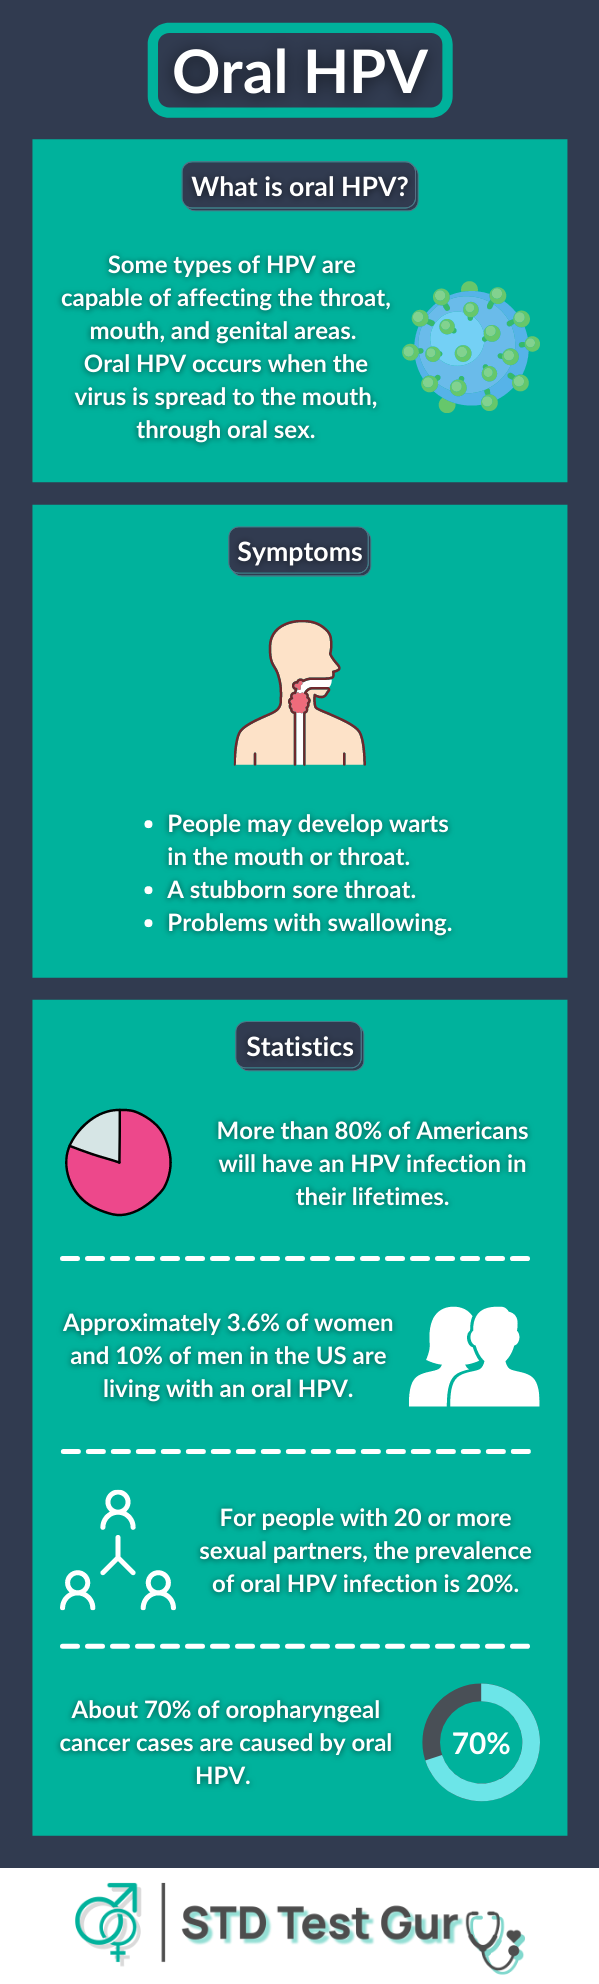 Oral HPV Symptoms and Statistics